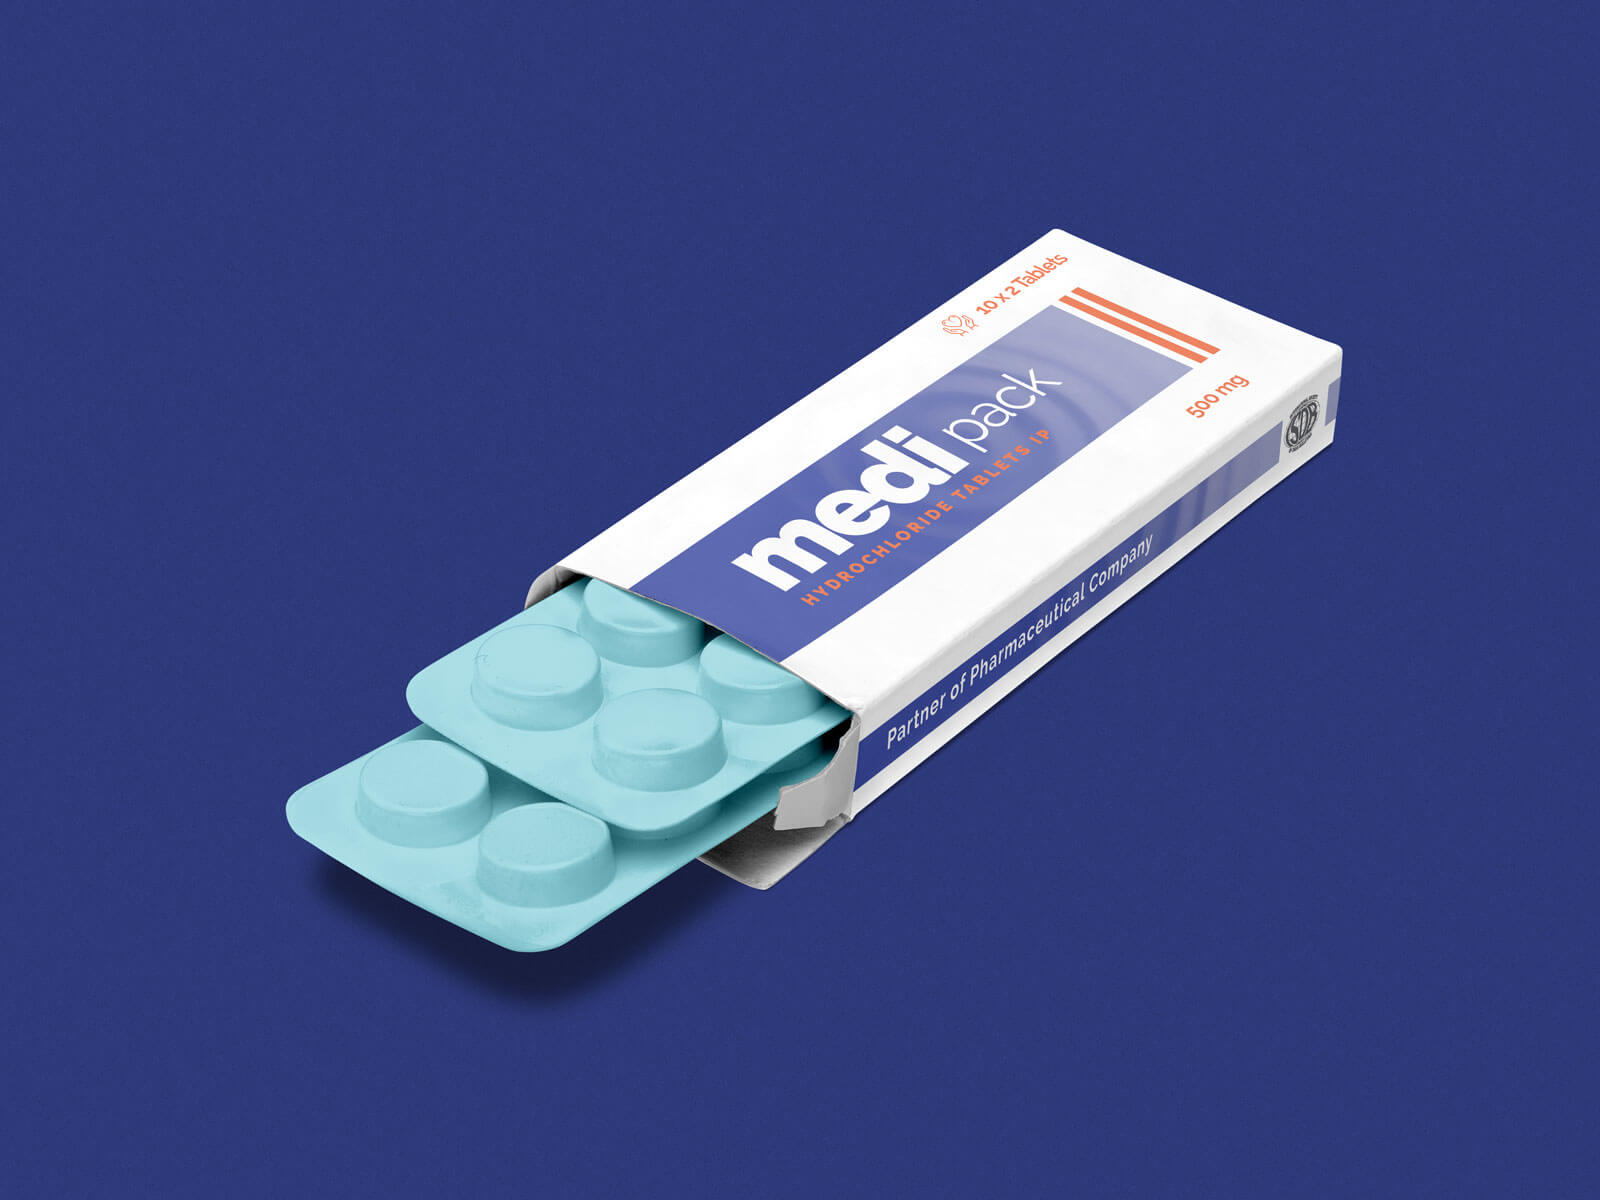 Download Free Pharmaceutical Medicine / Tablet Box Packaging Mockup ...